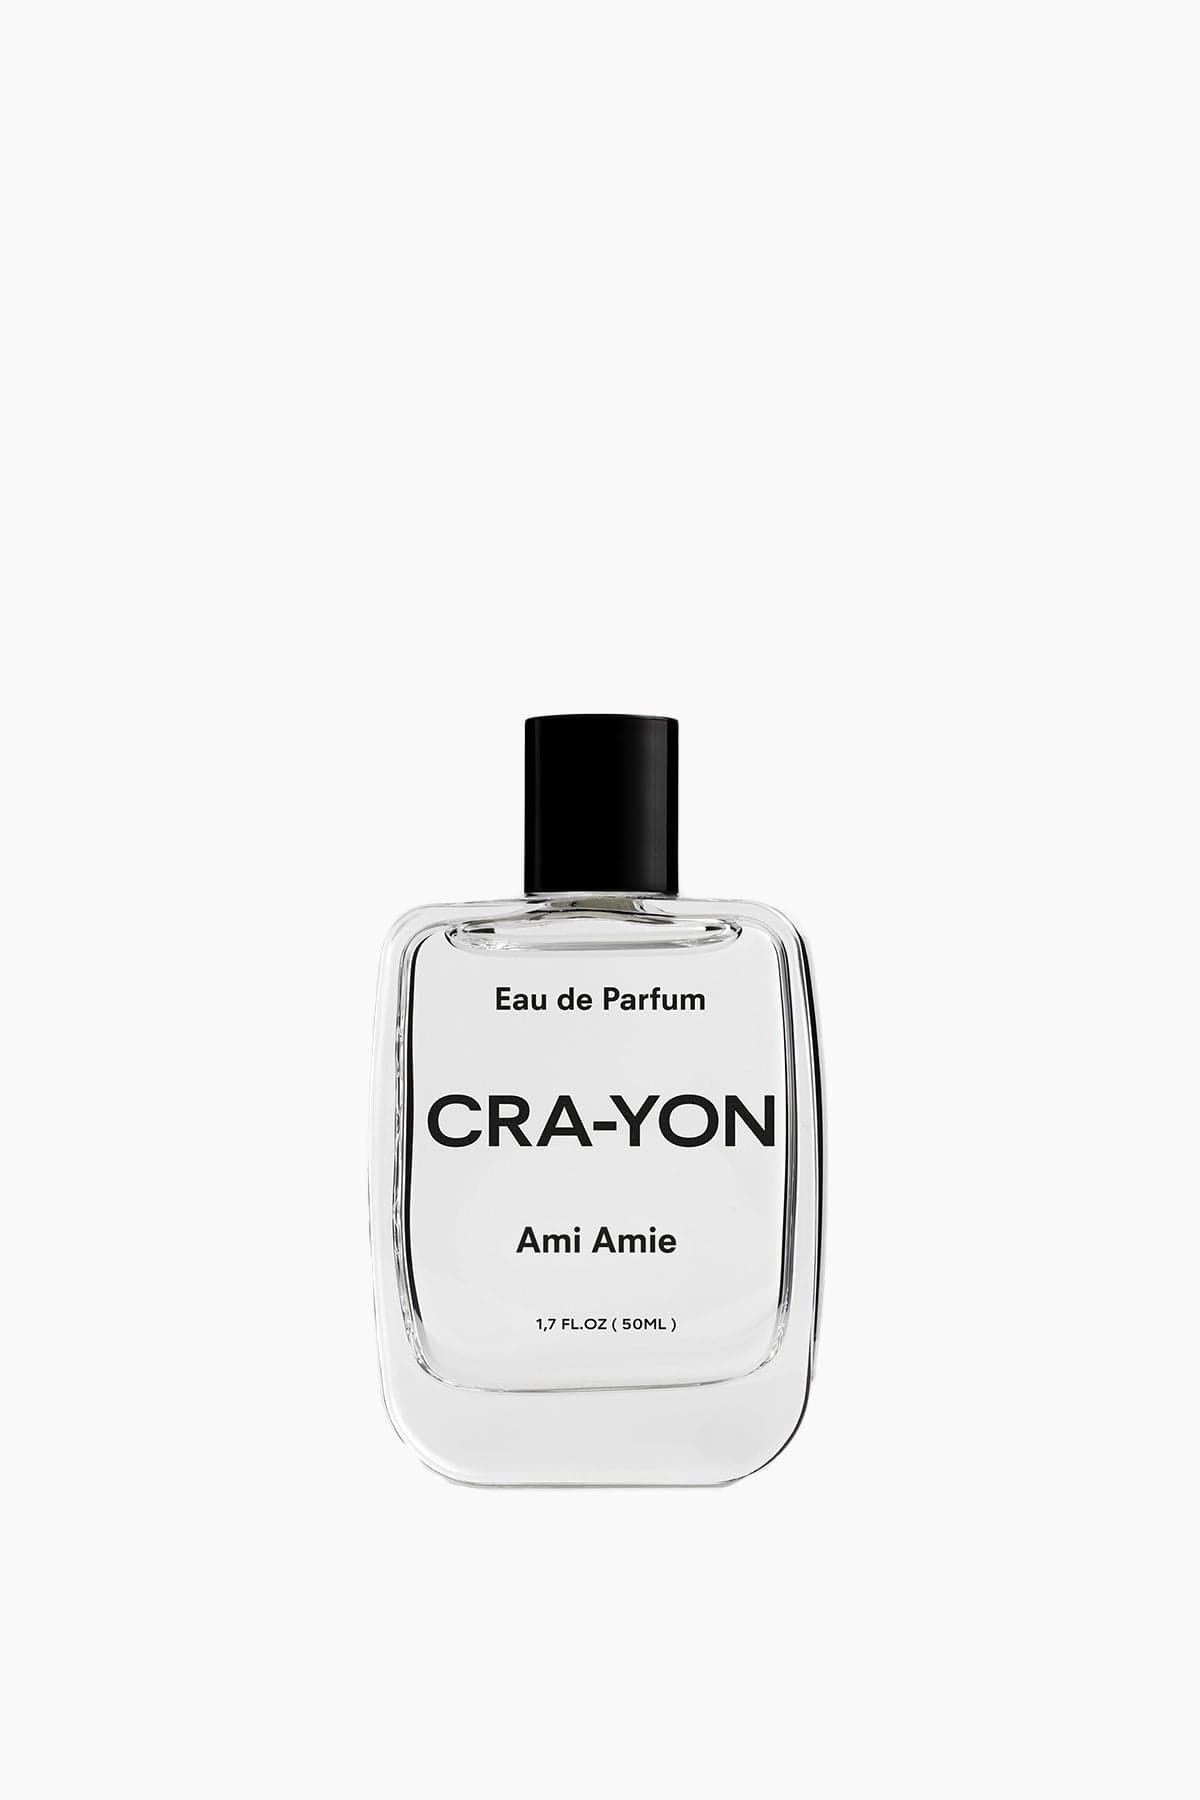 CRA-YON Beauty Ami Amie 50ml Perfume